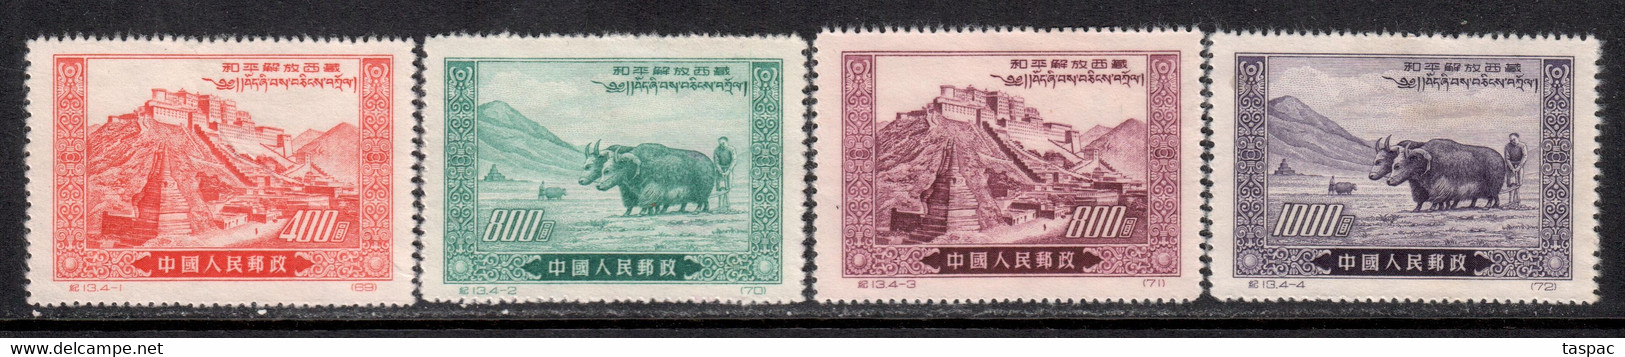 China P.R. 1952 Mi# 137-140 II (*) Mint No Gum, Hinged - Reprints - Liberation Of Tibet - Reimpresiones Oficiales